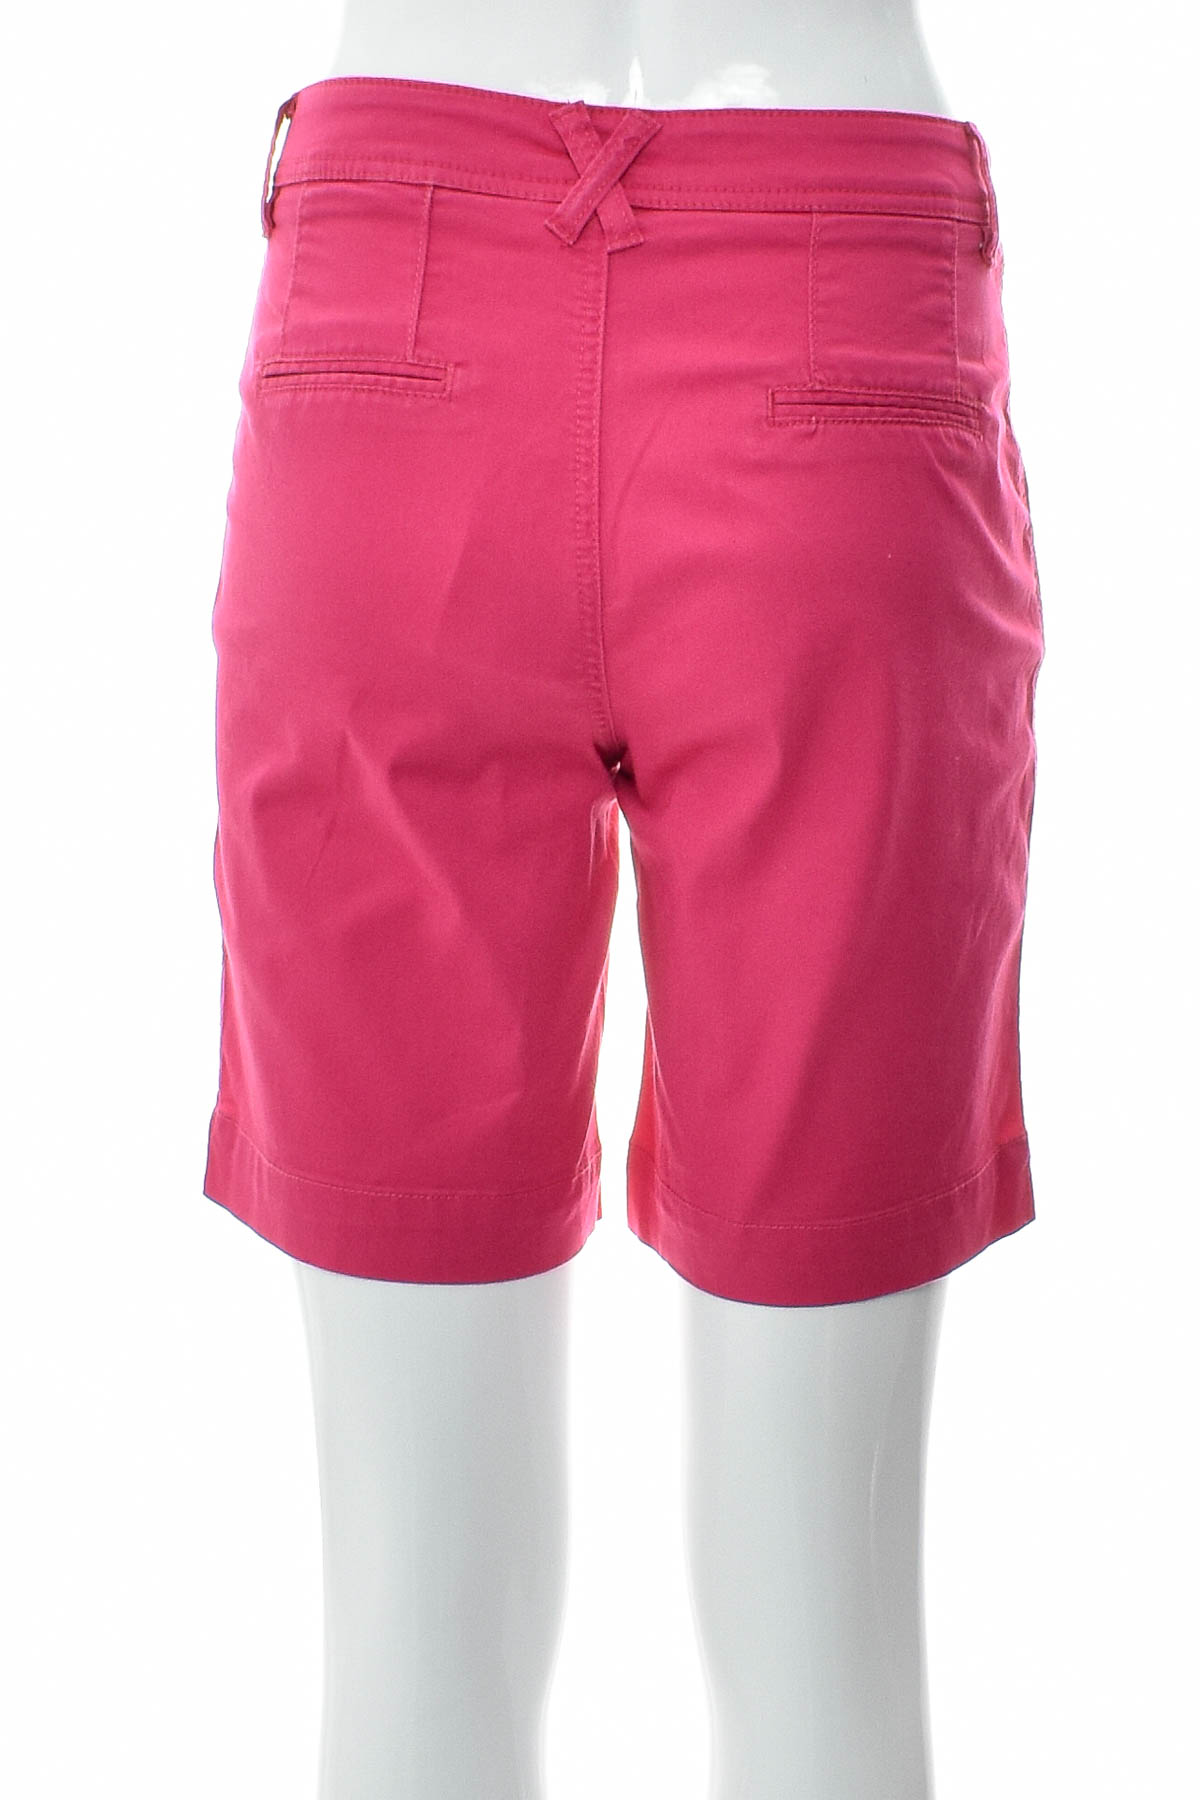 Female shorts - B.C. Best Connections - 1